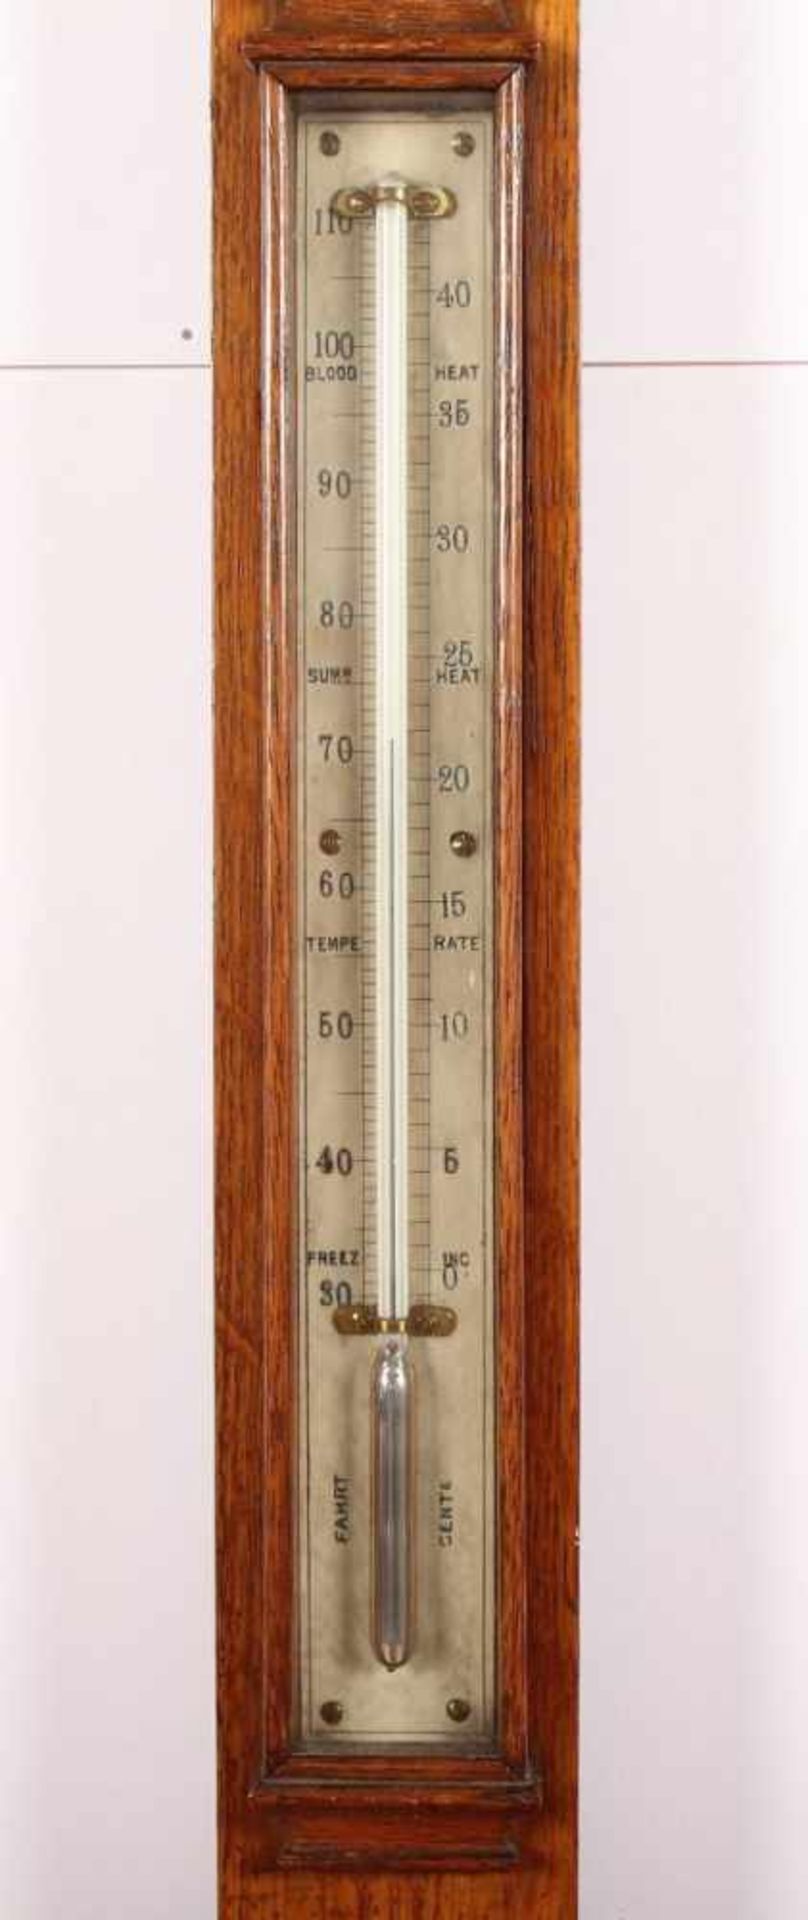 BAROMETER, Nussholzgehäuse, Quecksilbersäule, Thermometer, min.besch., L 95, J.H. STEWARD, LONDON, - Image 3 of 3